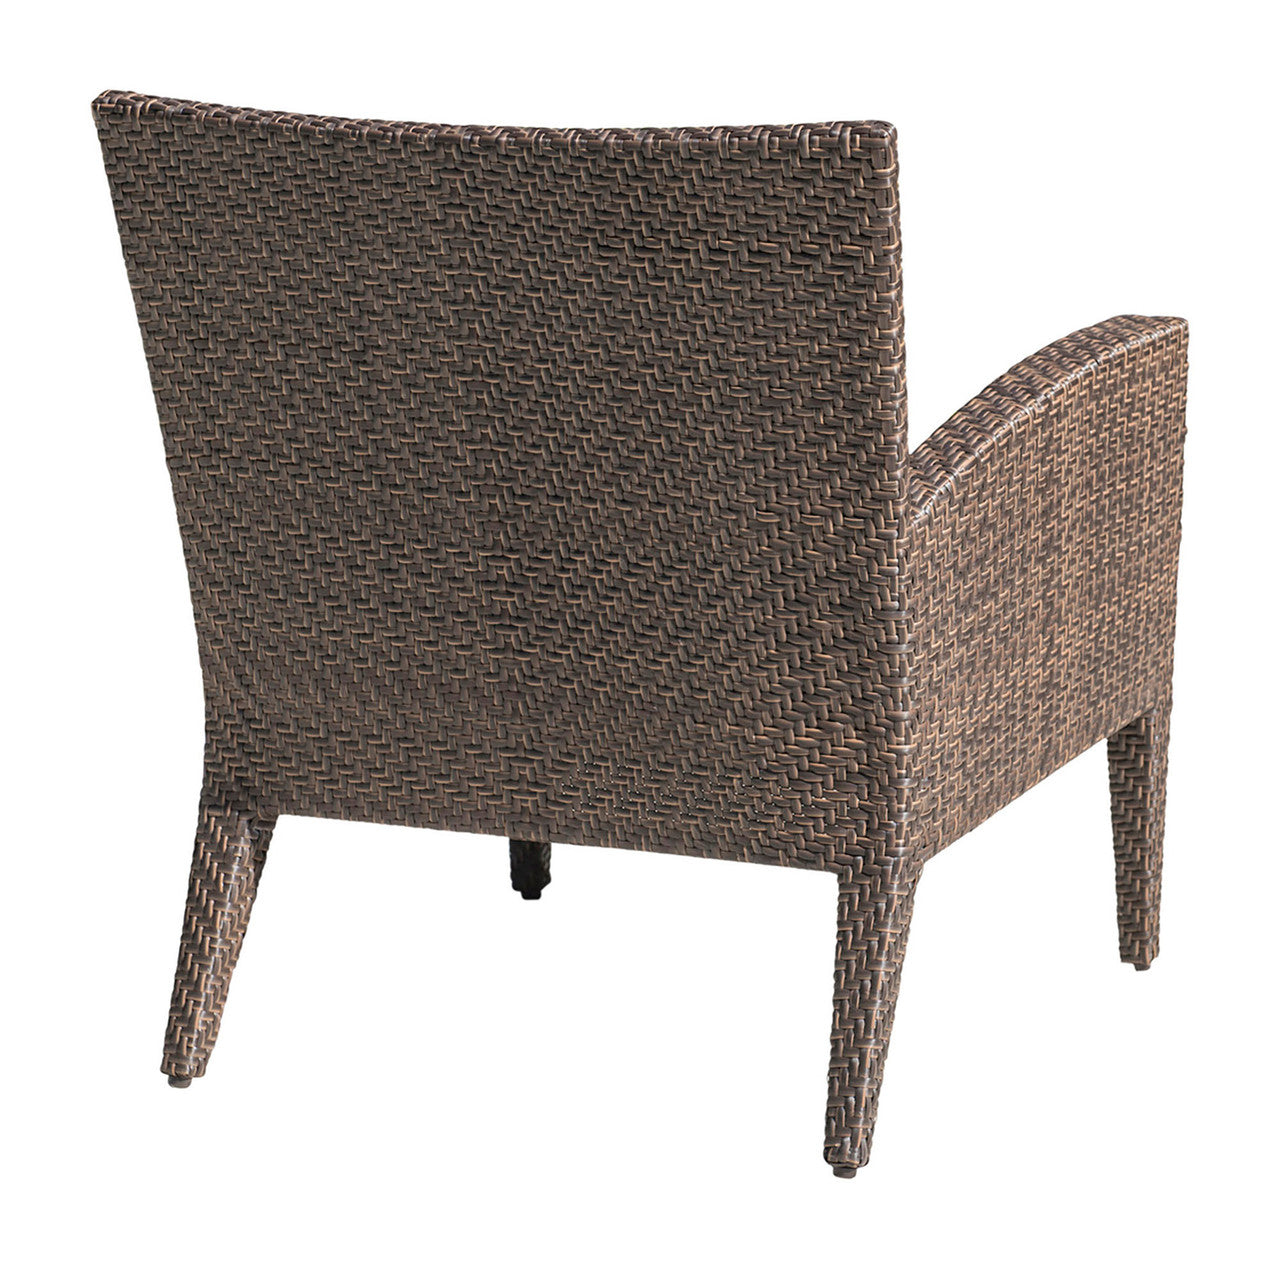 Panama Jack Oasis Lounge Chair with Cushion